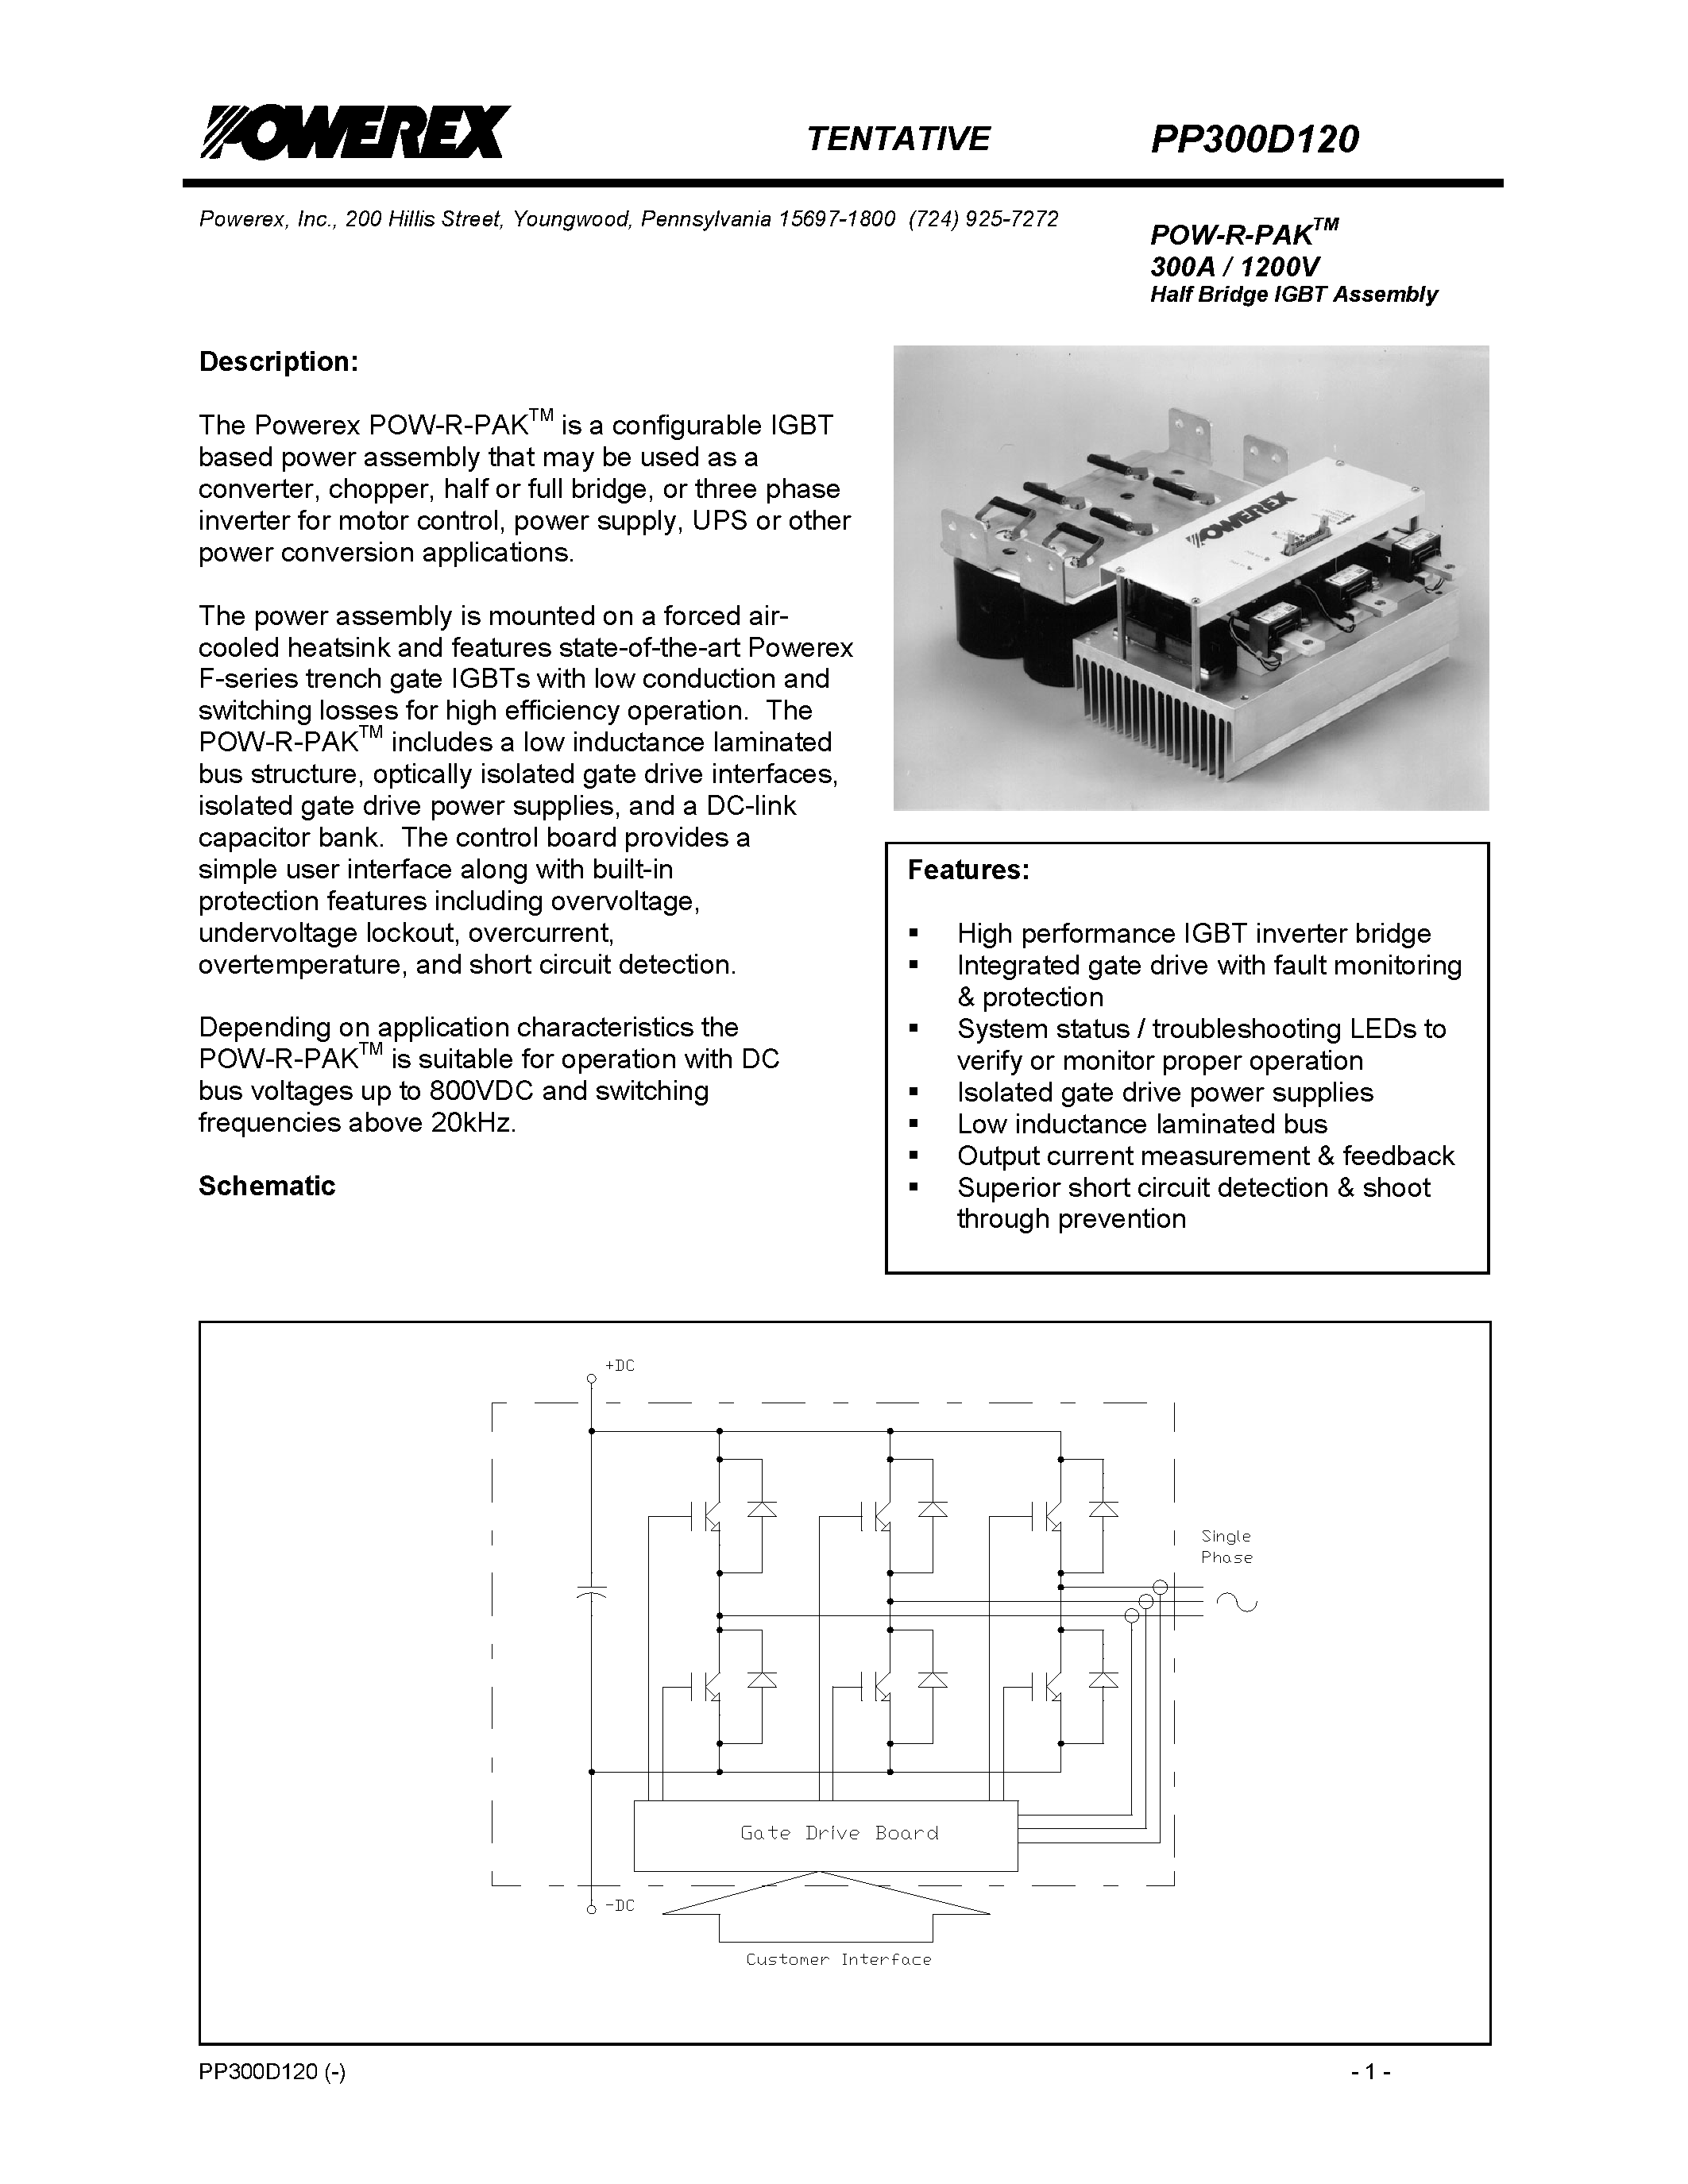 Datasheet PP300D120 - POW-R-PAK 300A / 1200V Half Bridge IGBT Assembly page 1